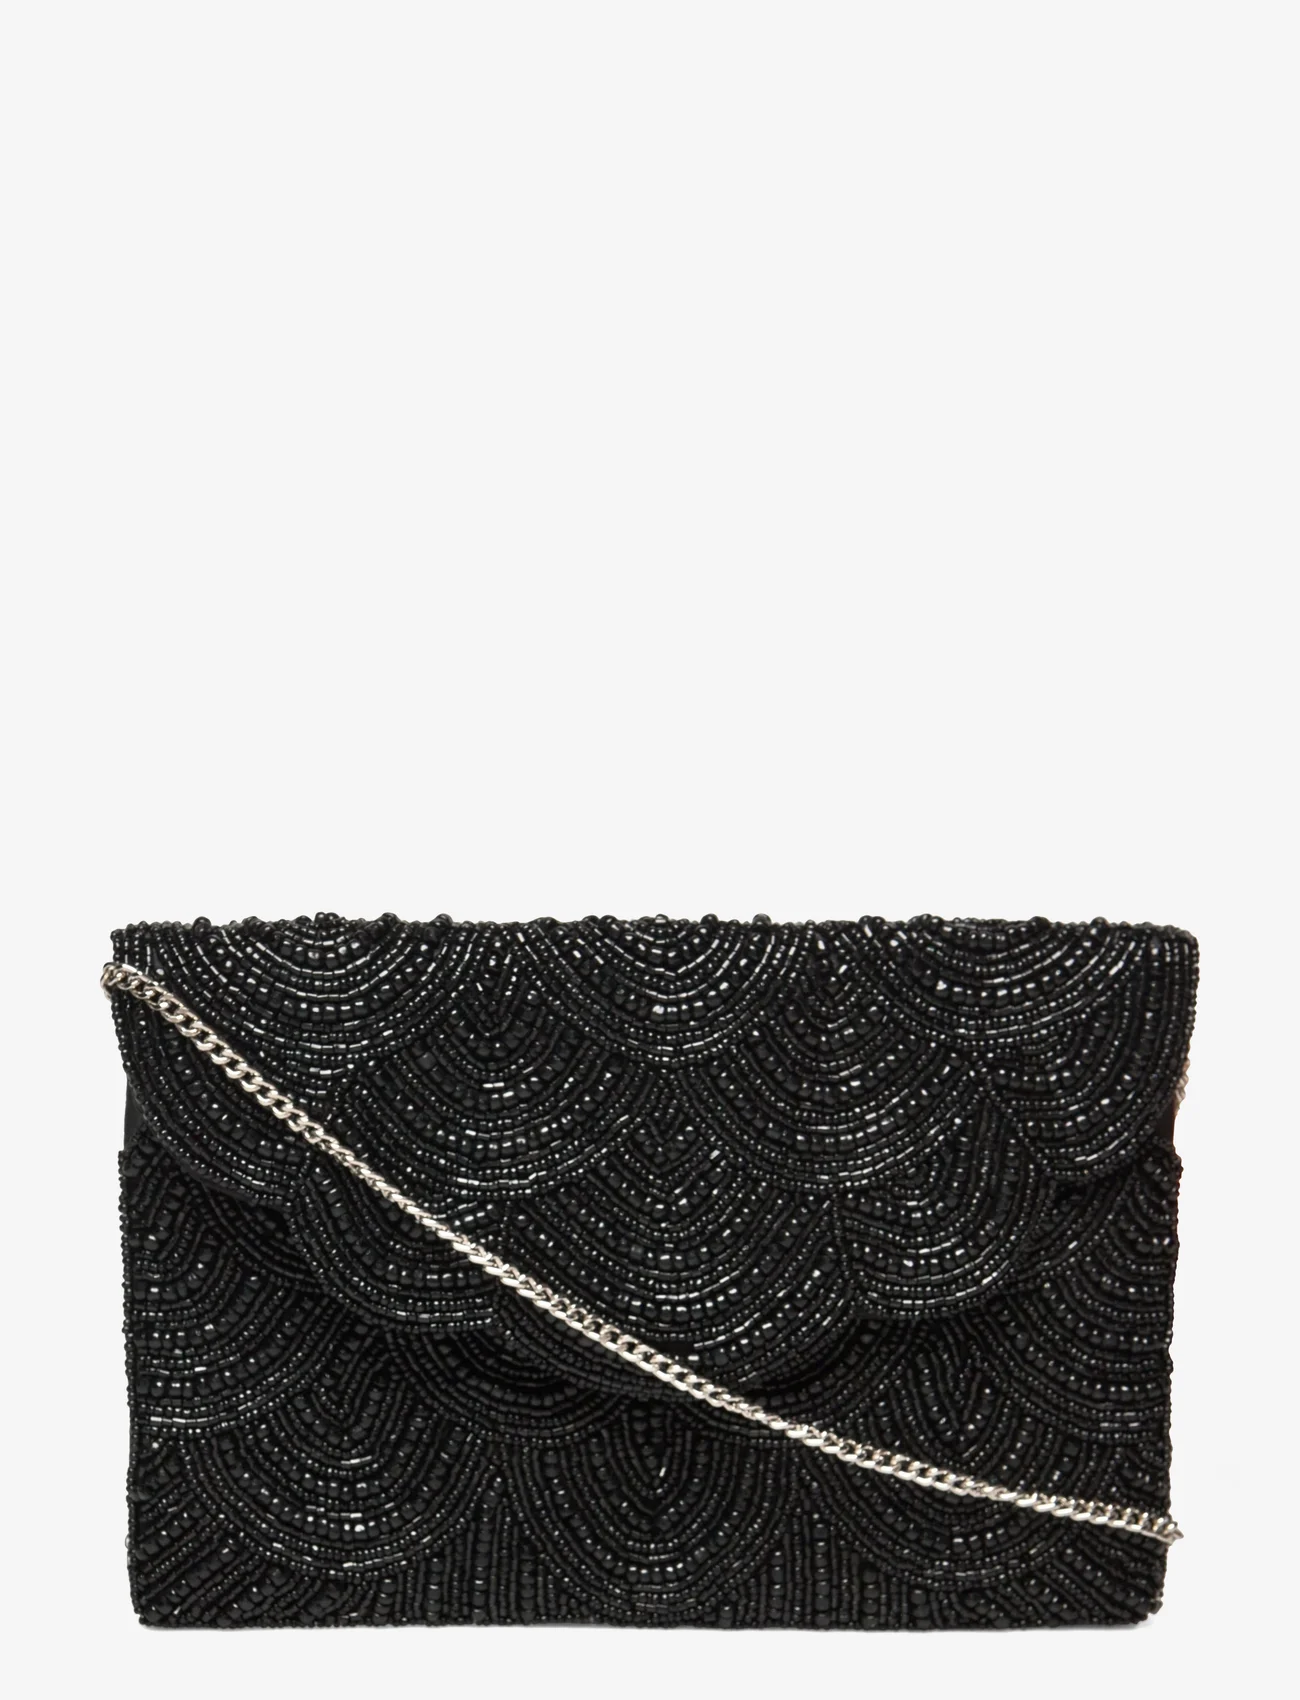 Pipol's Bazaar - Casablanca Black Clutch Bag - festmode zu outlet-preisen - multi - 0